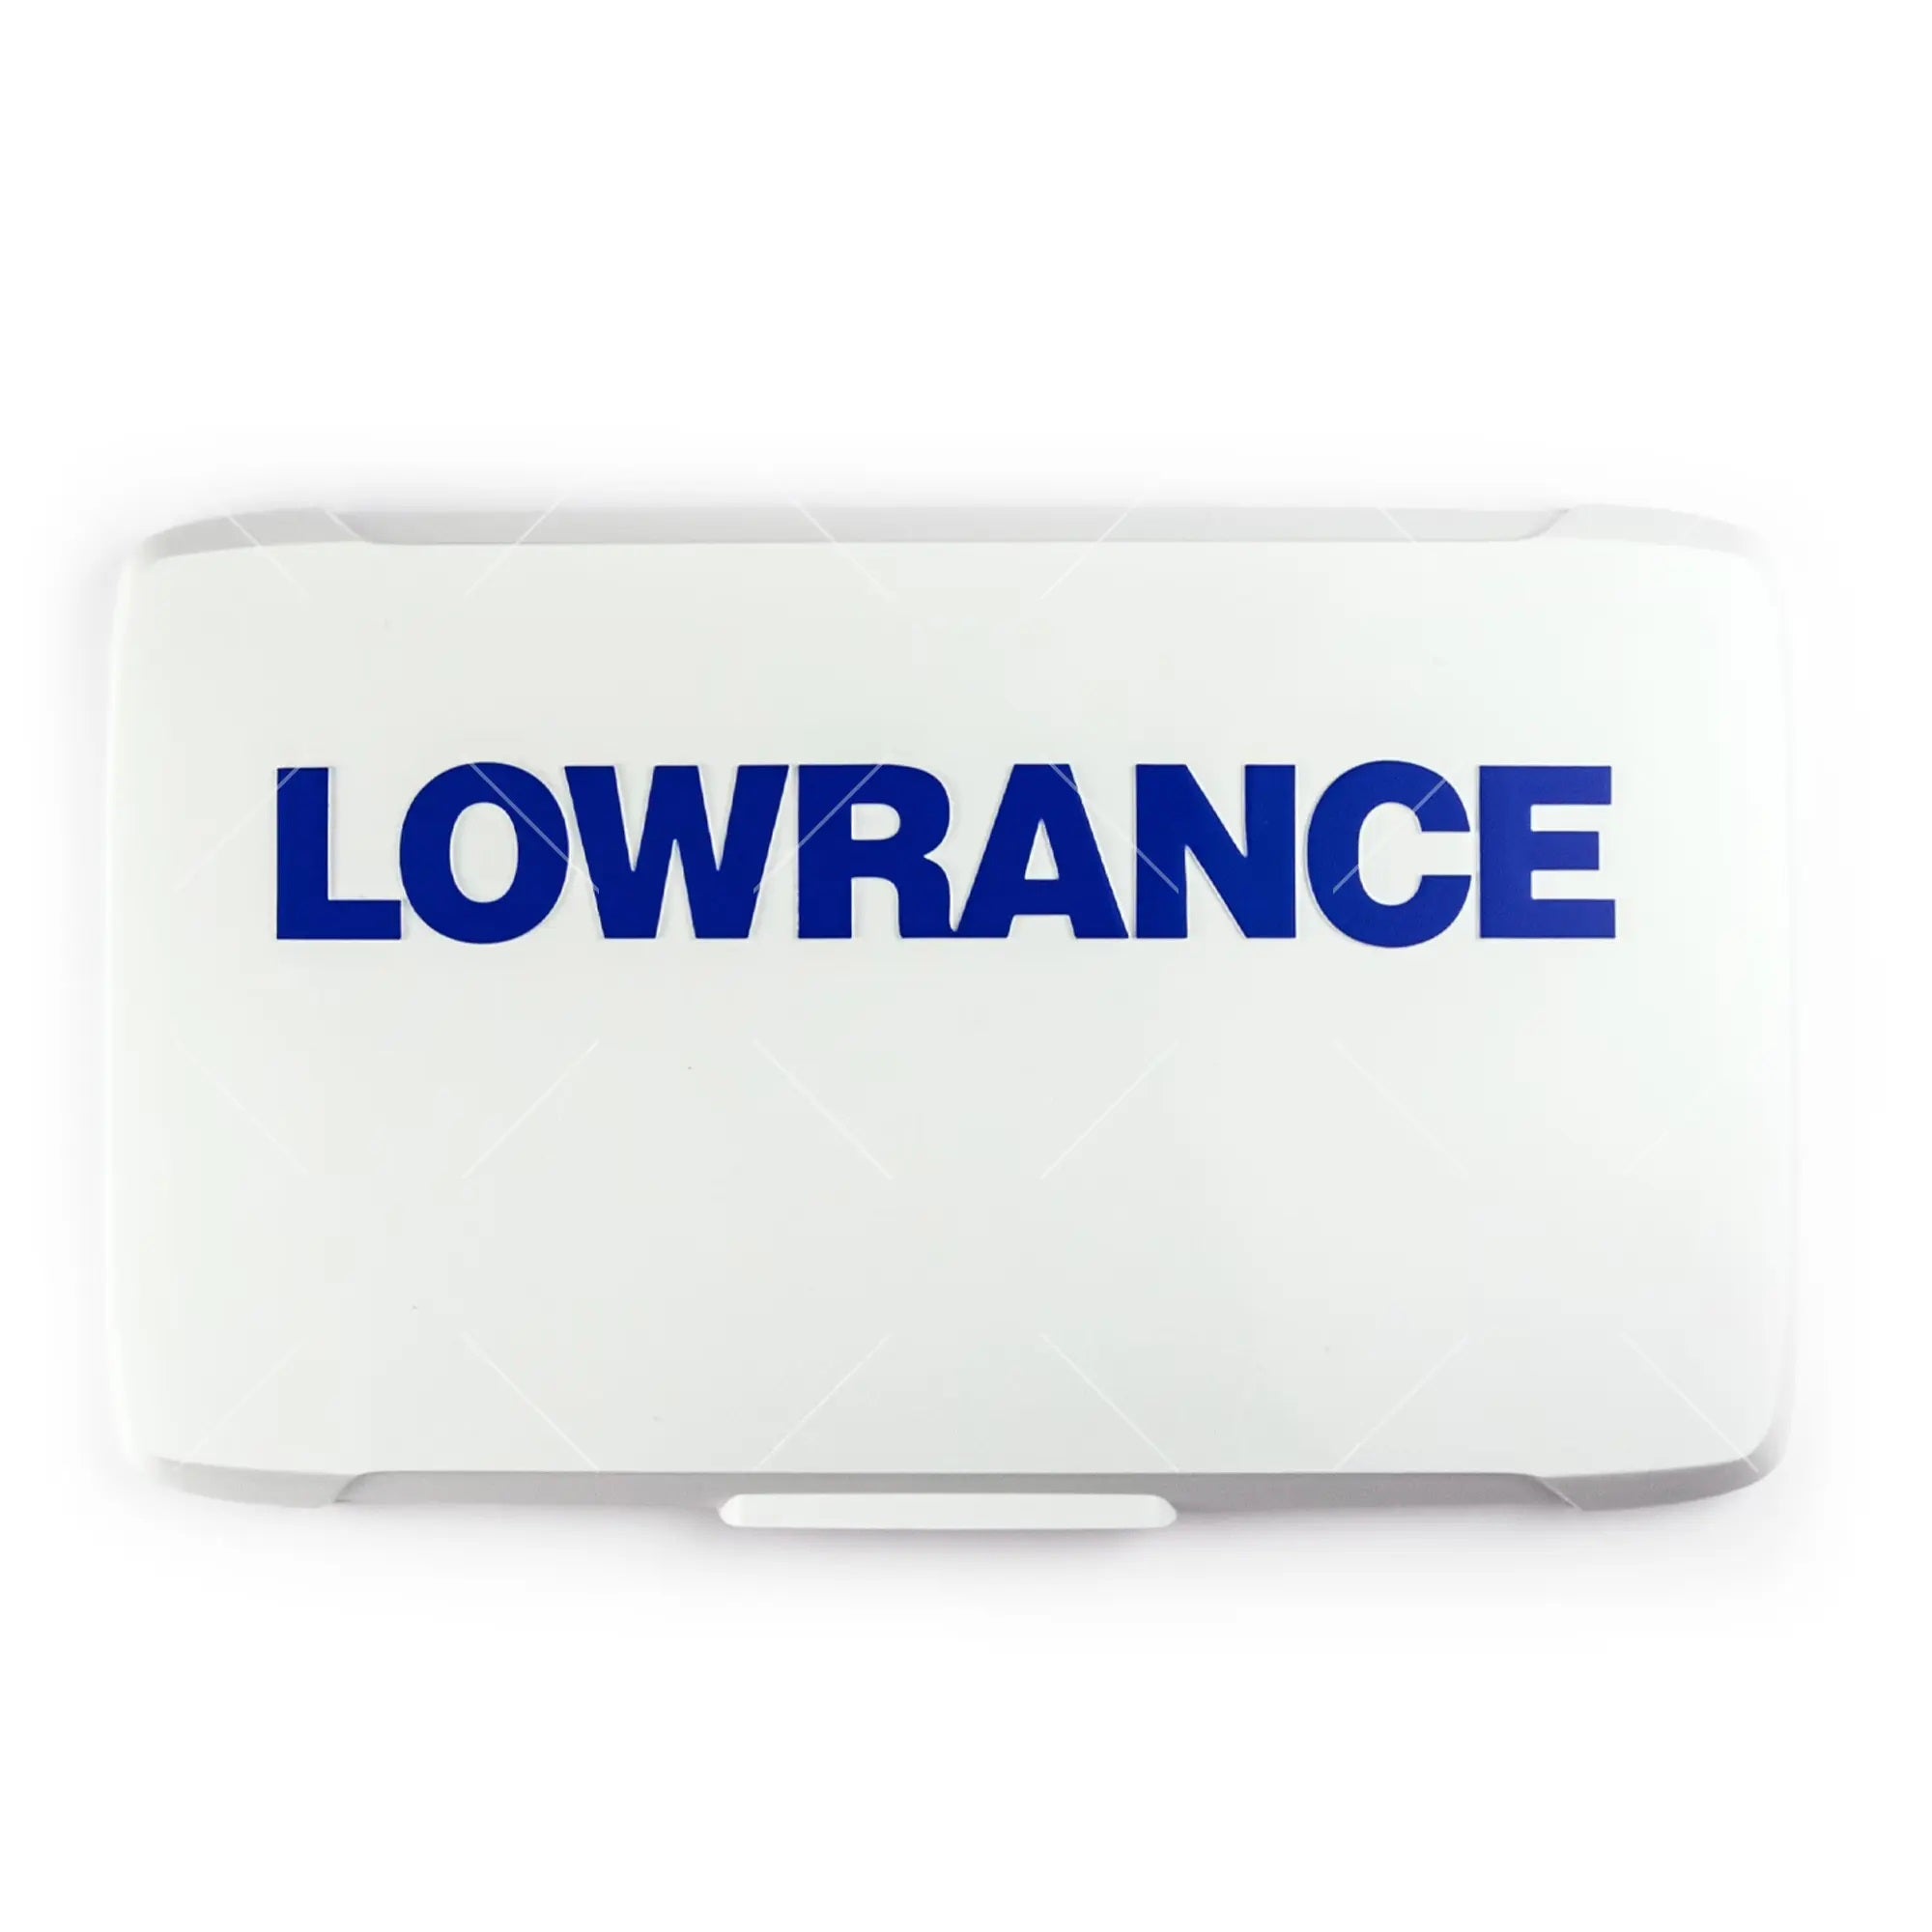 000-16249-001,Lowrance